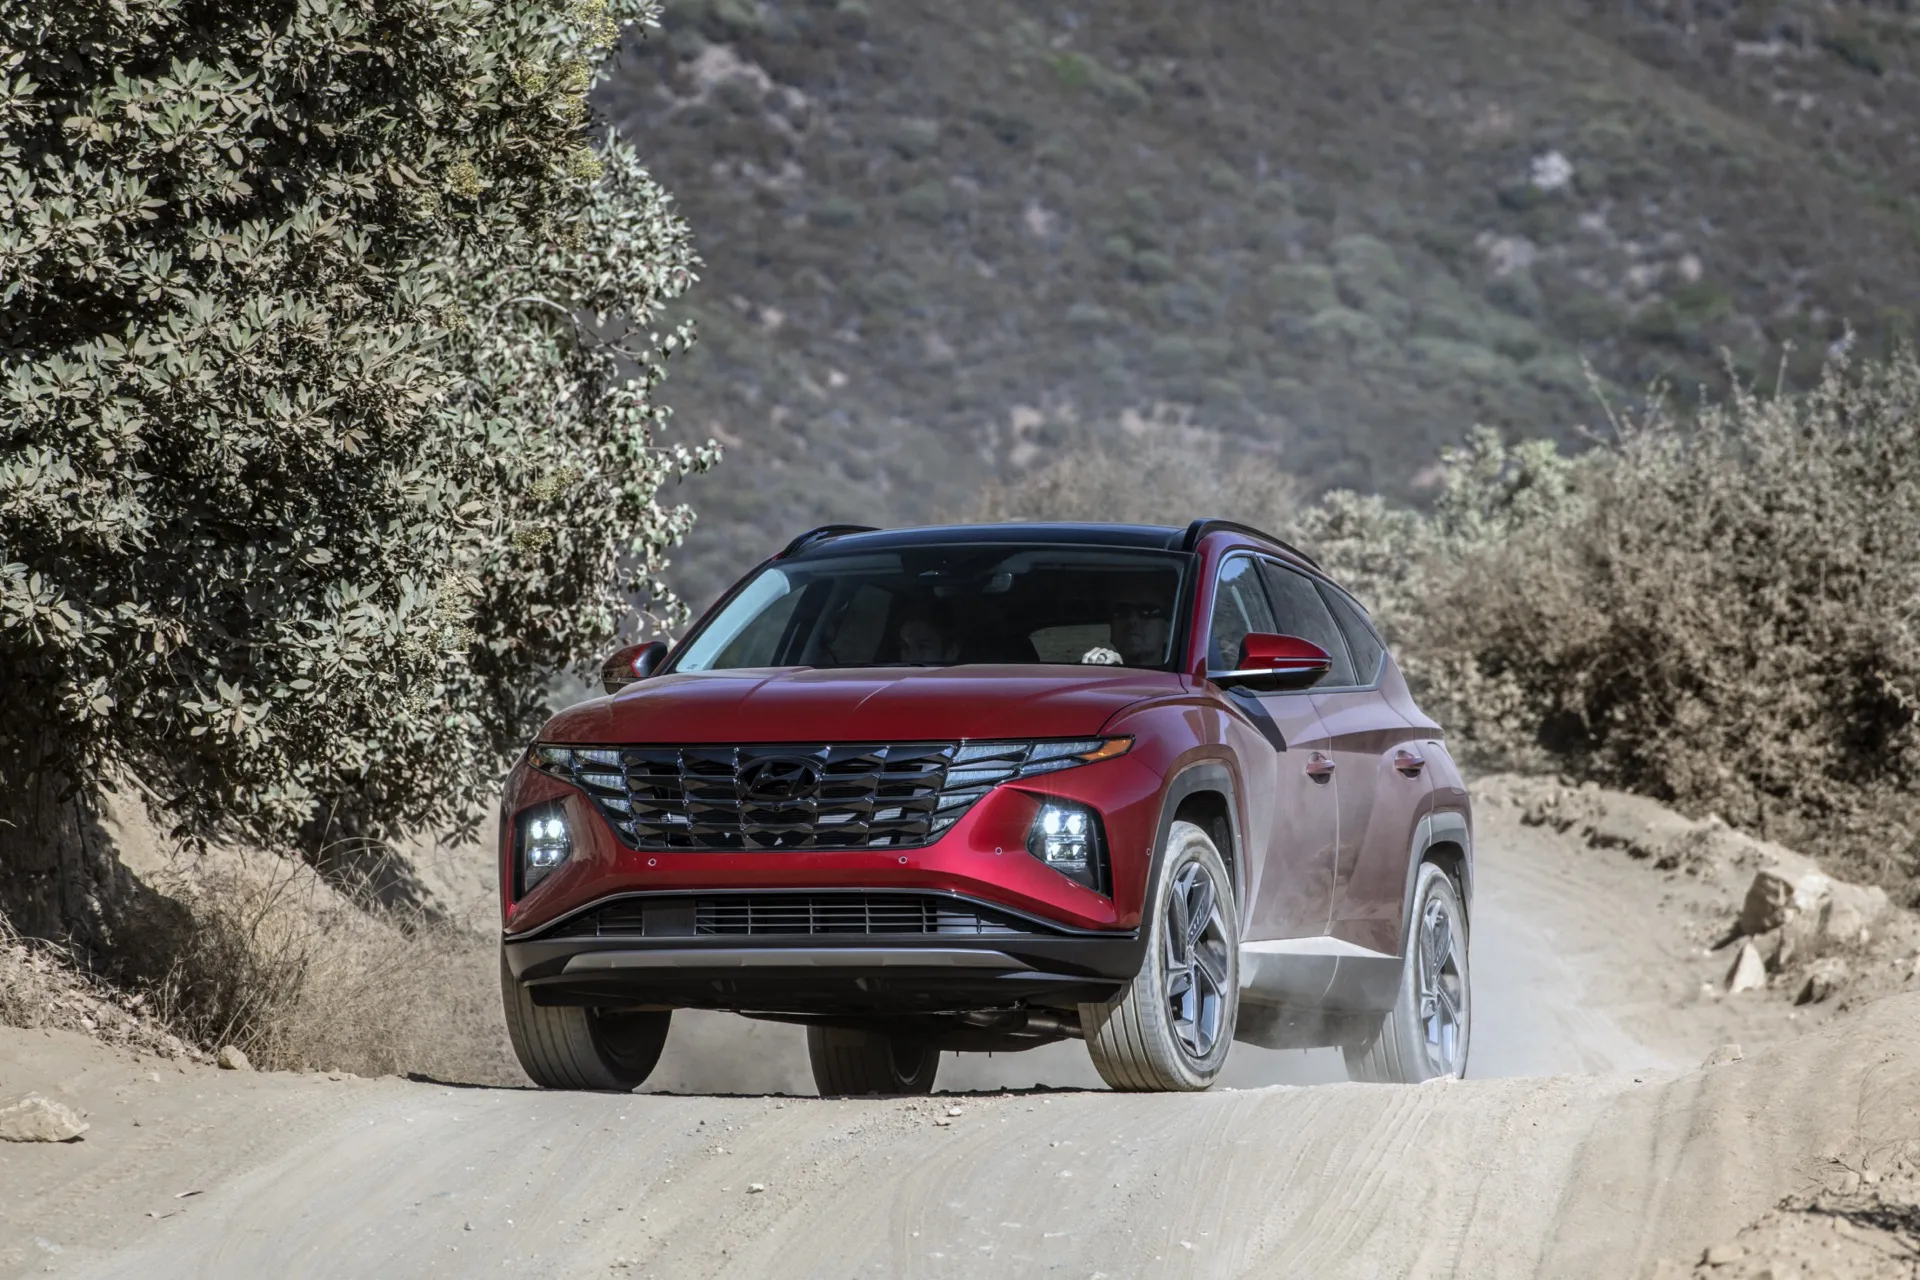 Hyundai Tucson Review (2024)